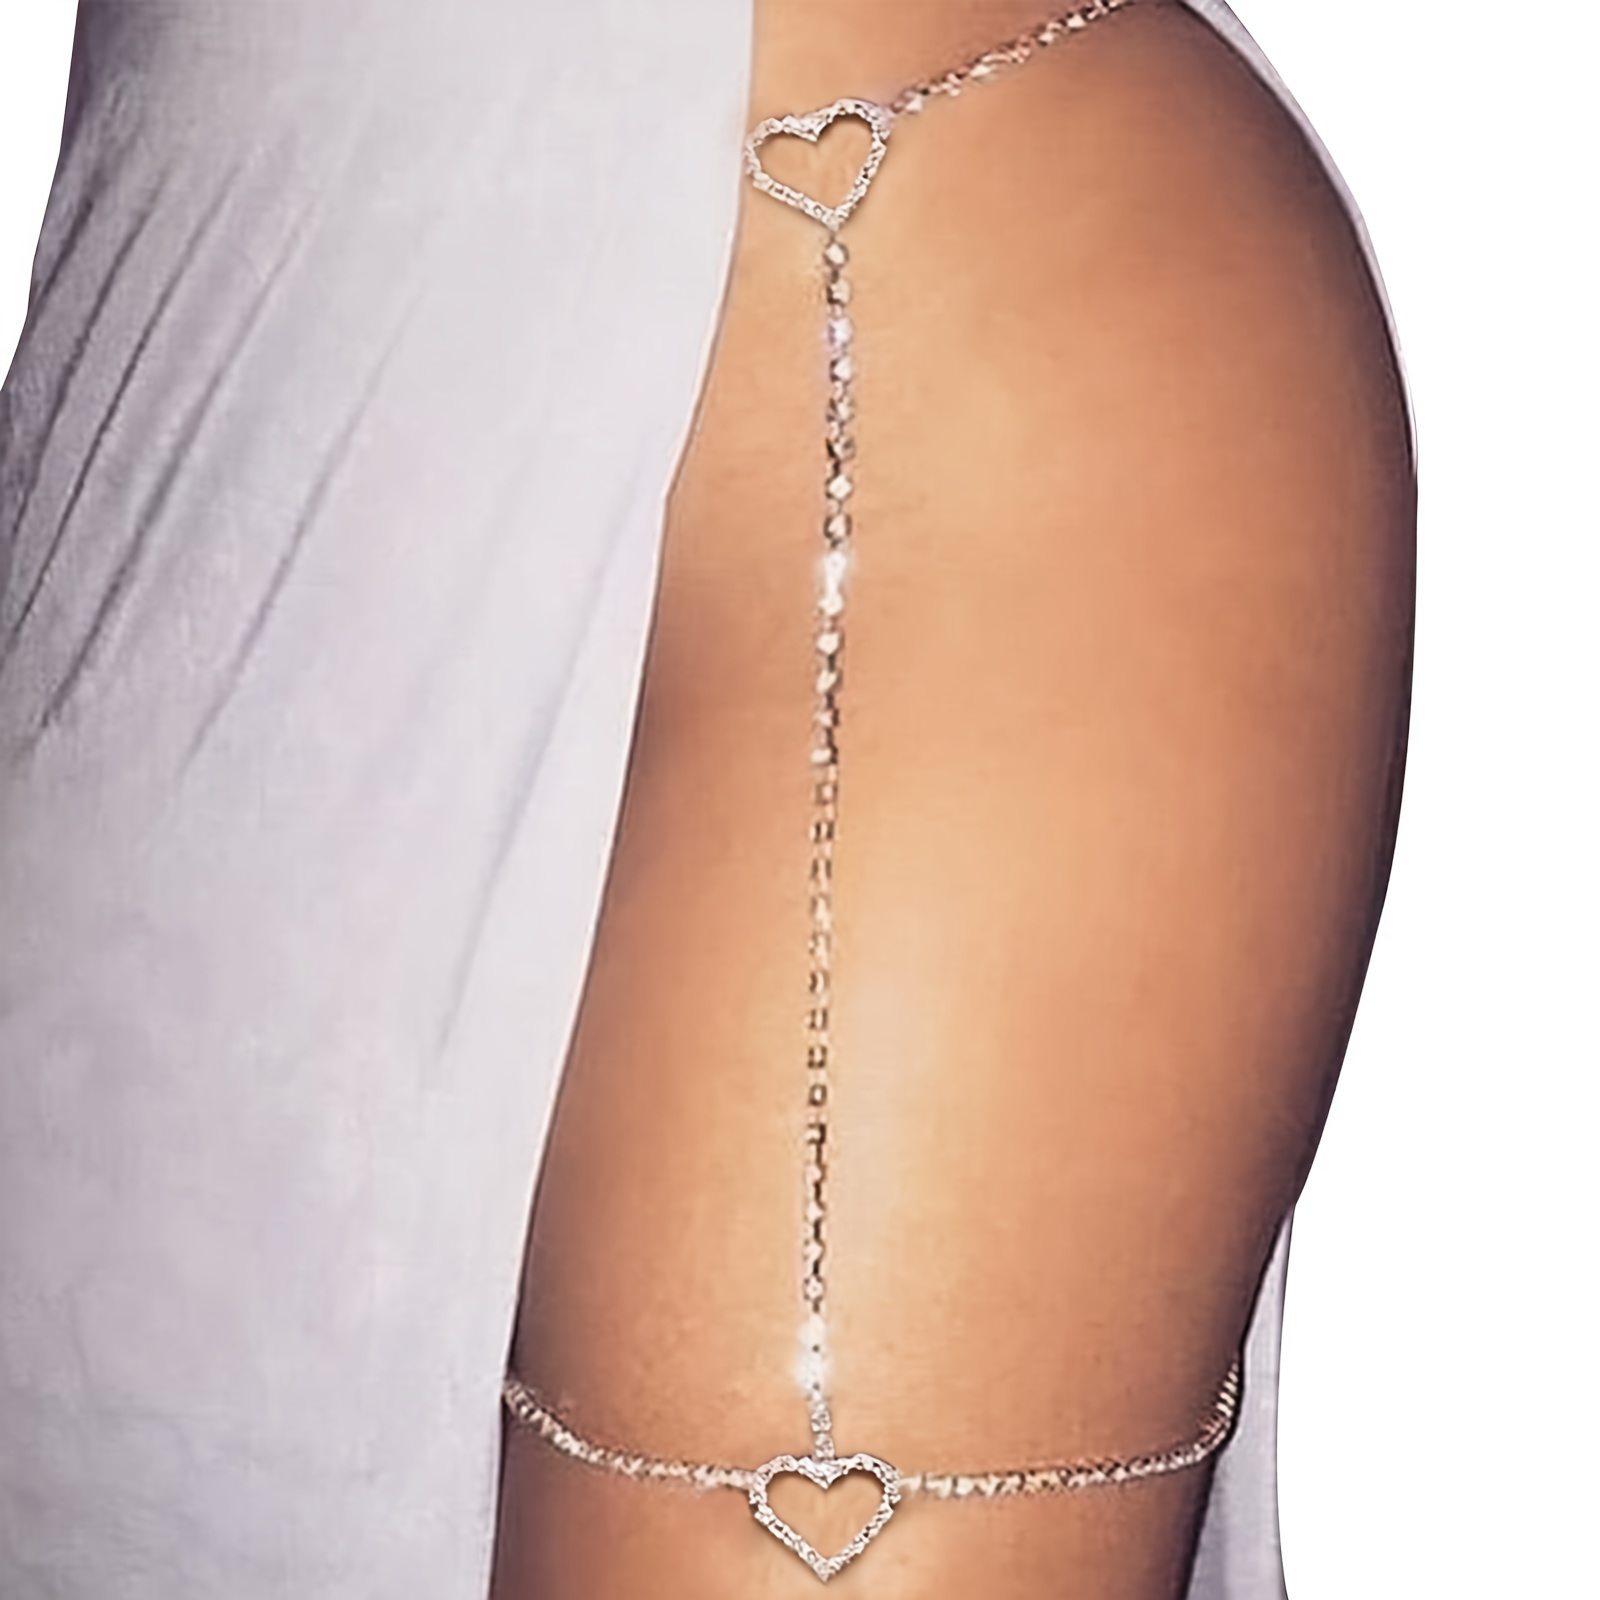 Fashion Flash Drill Bikini Body Chain Sex Love Chest Chain Jewelry